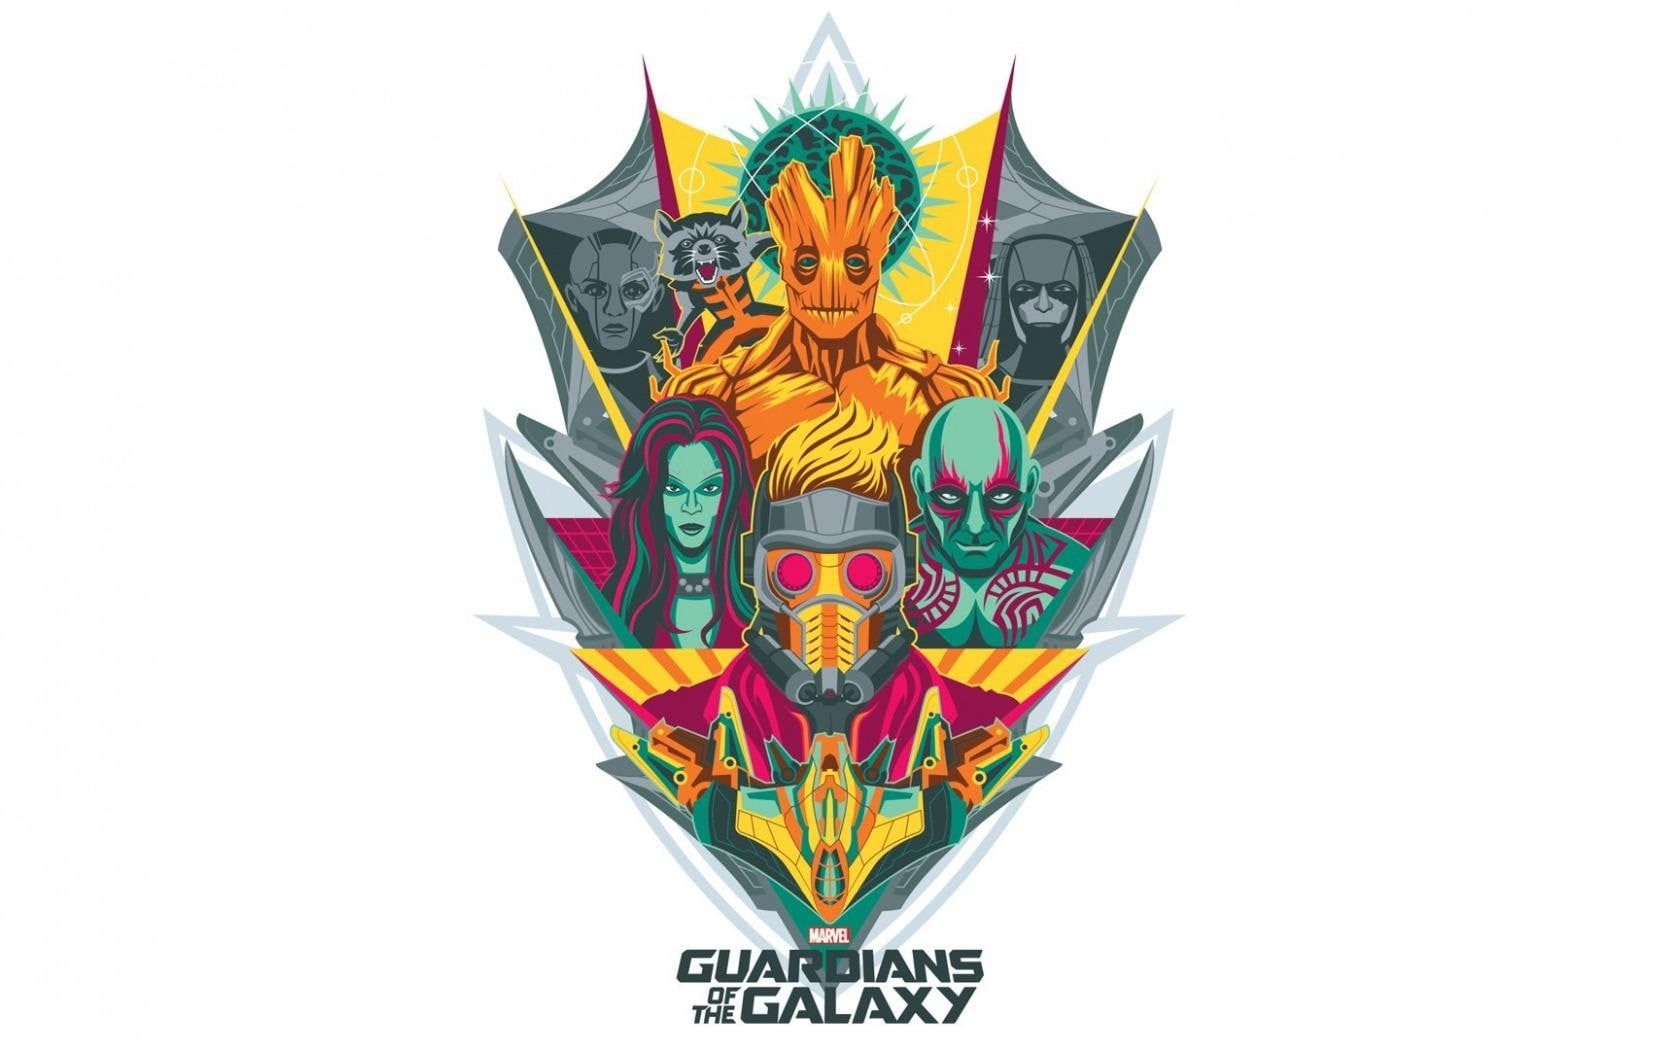 Guardian of the Galaxy wallpaper Guardians of the Galaxy Star Lord #Gamora Rocket Raccoon #Groot Drax the Des. Galaxy wallpaper, Black wallpaper iphone, Wallpaper